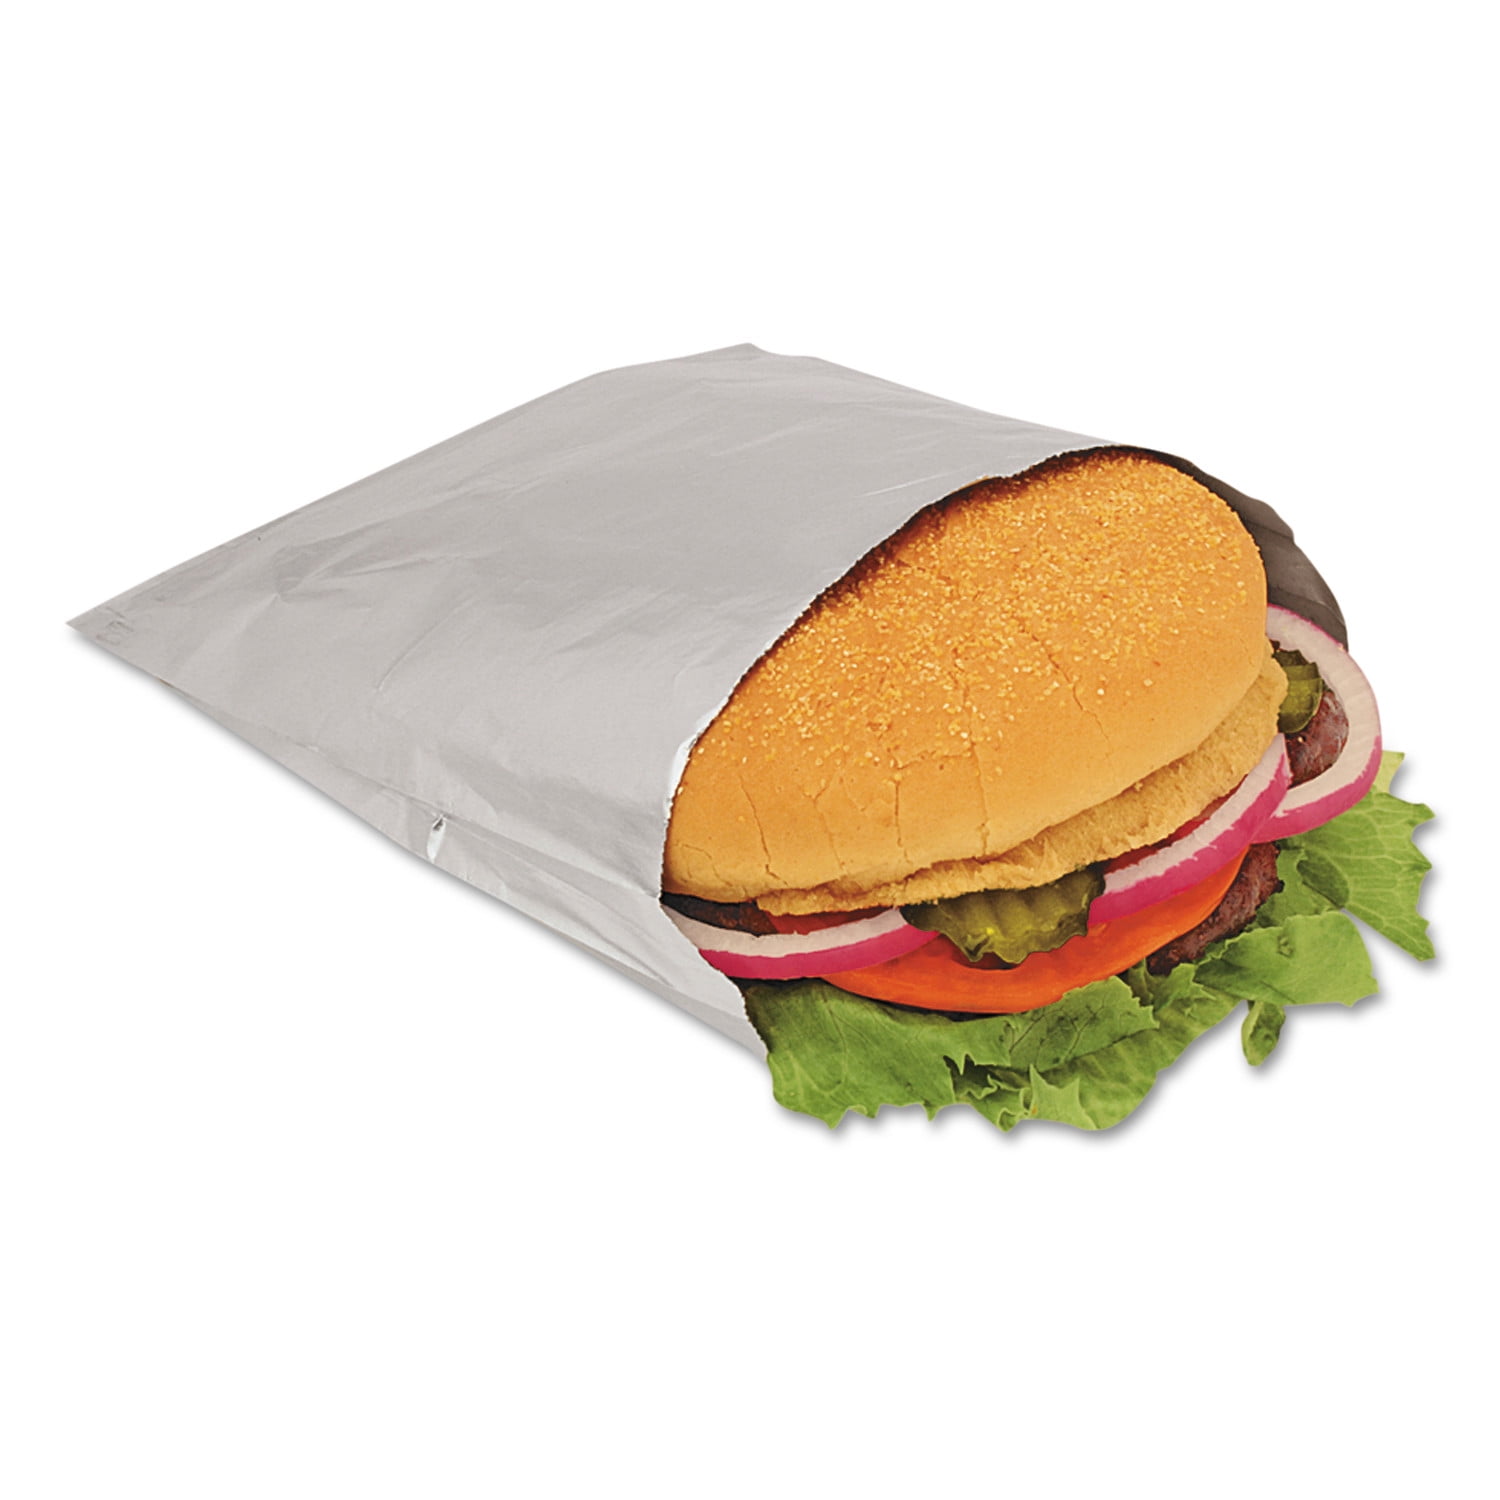 1000 x Greaseproof Paper Bags Sandwich Sweet 6 x 6" Takeaway Food White Bags 